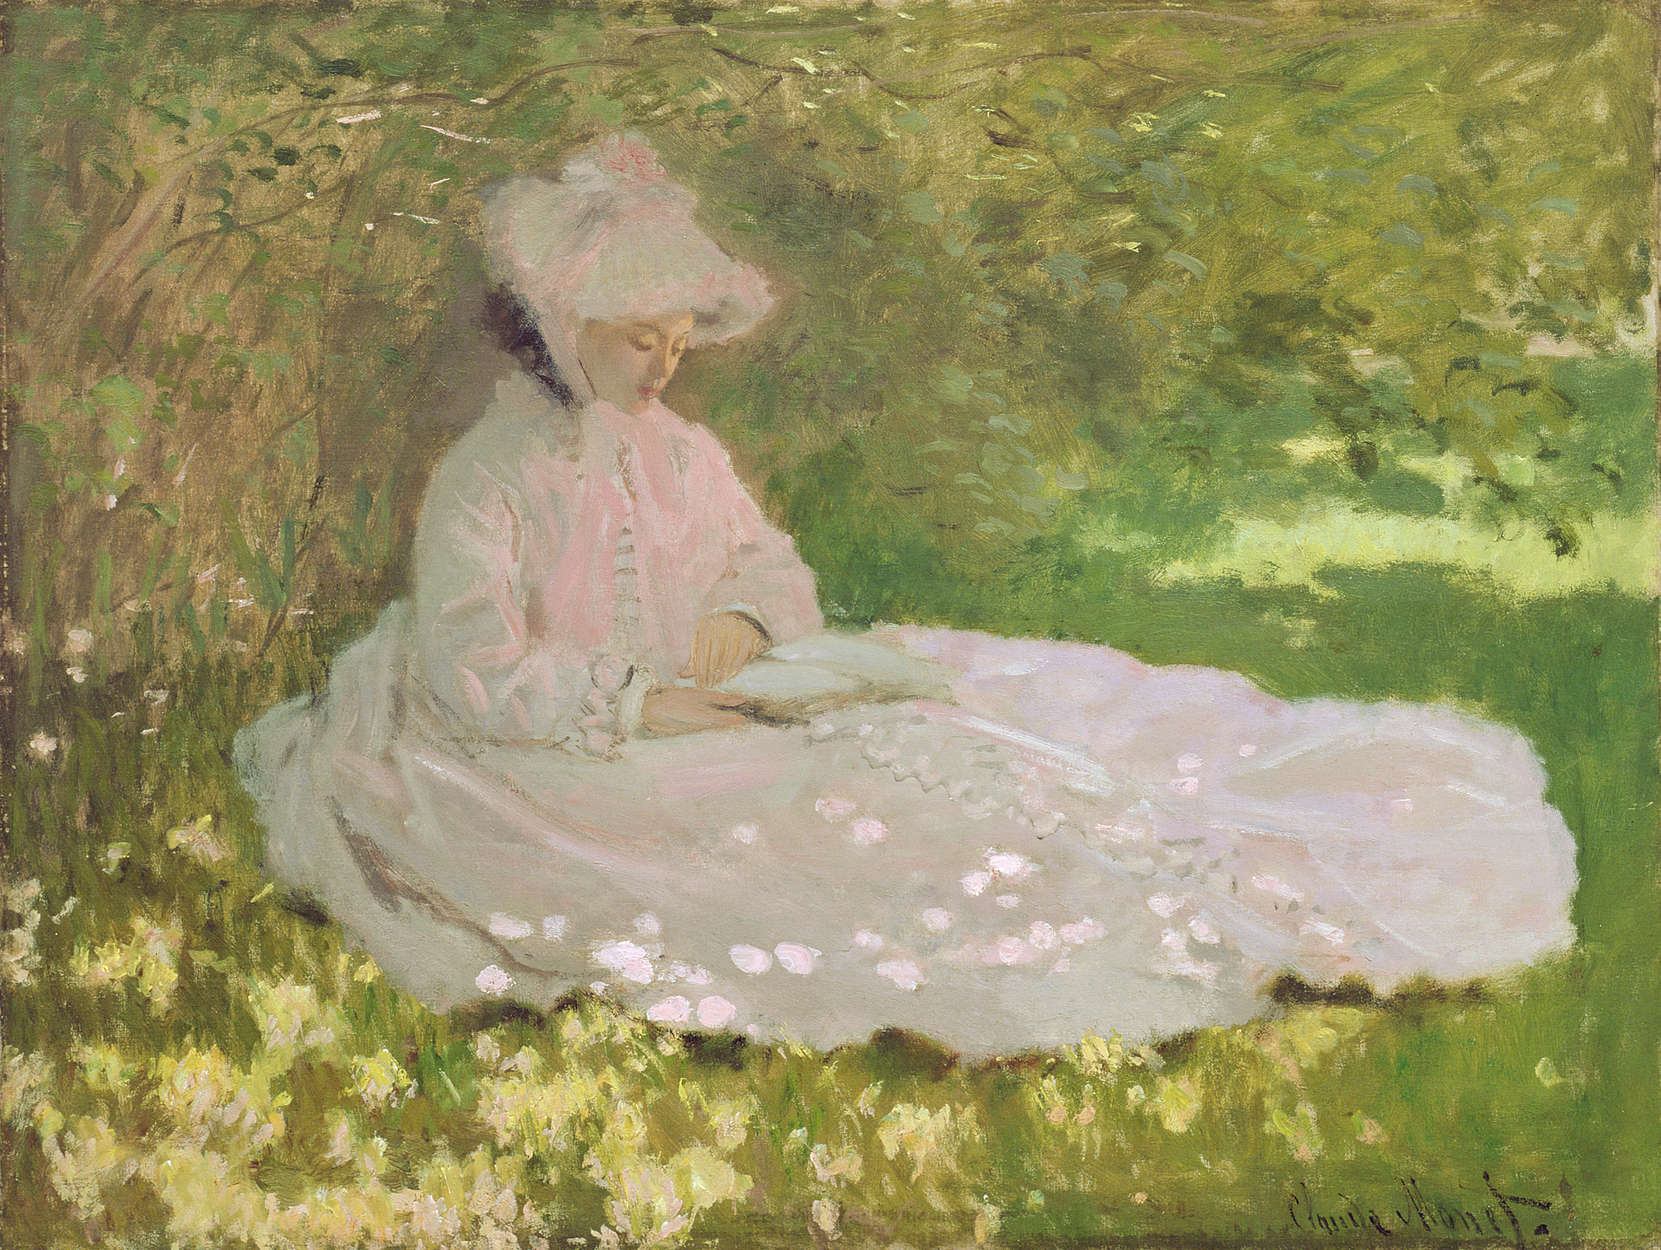             Mural "Primavera" de Claude Monet
        